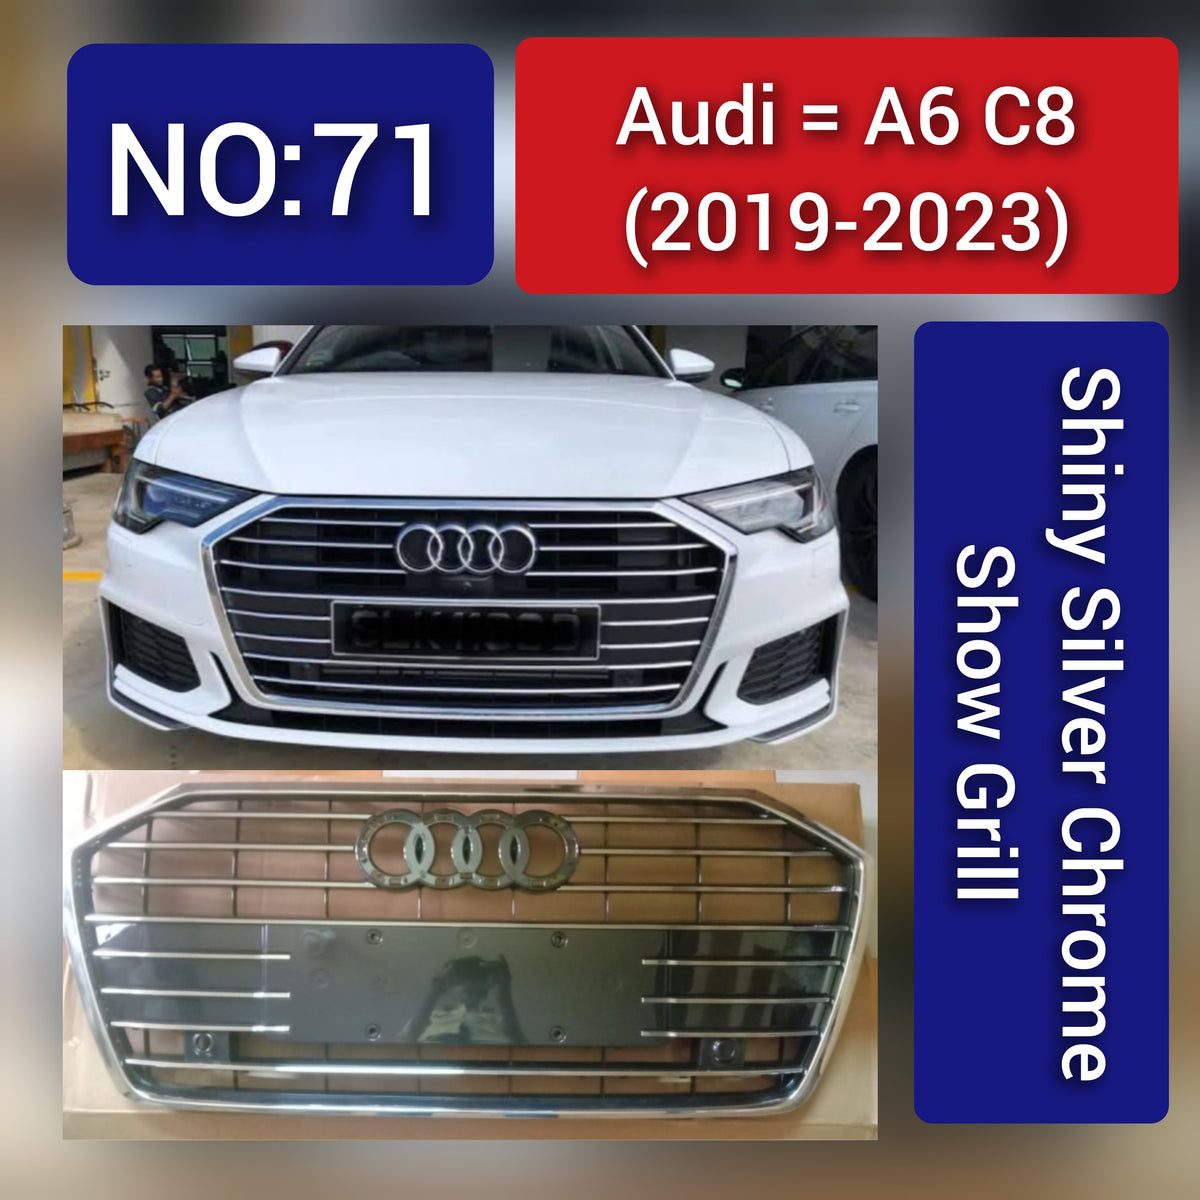 Audi A6 C8(2019-23) Shiny Silver Chrome Show Grill